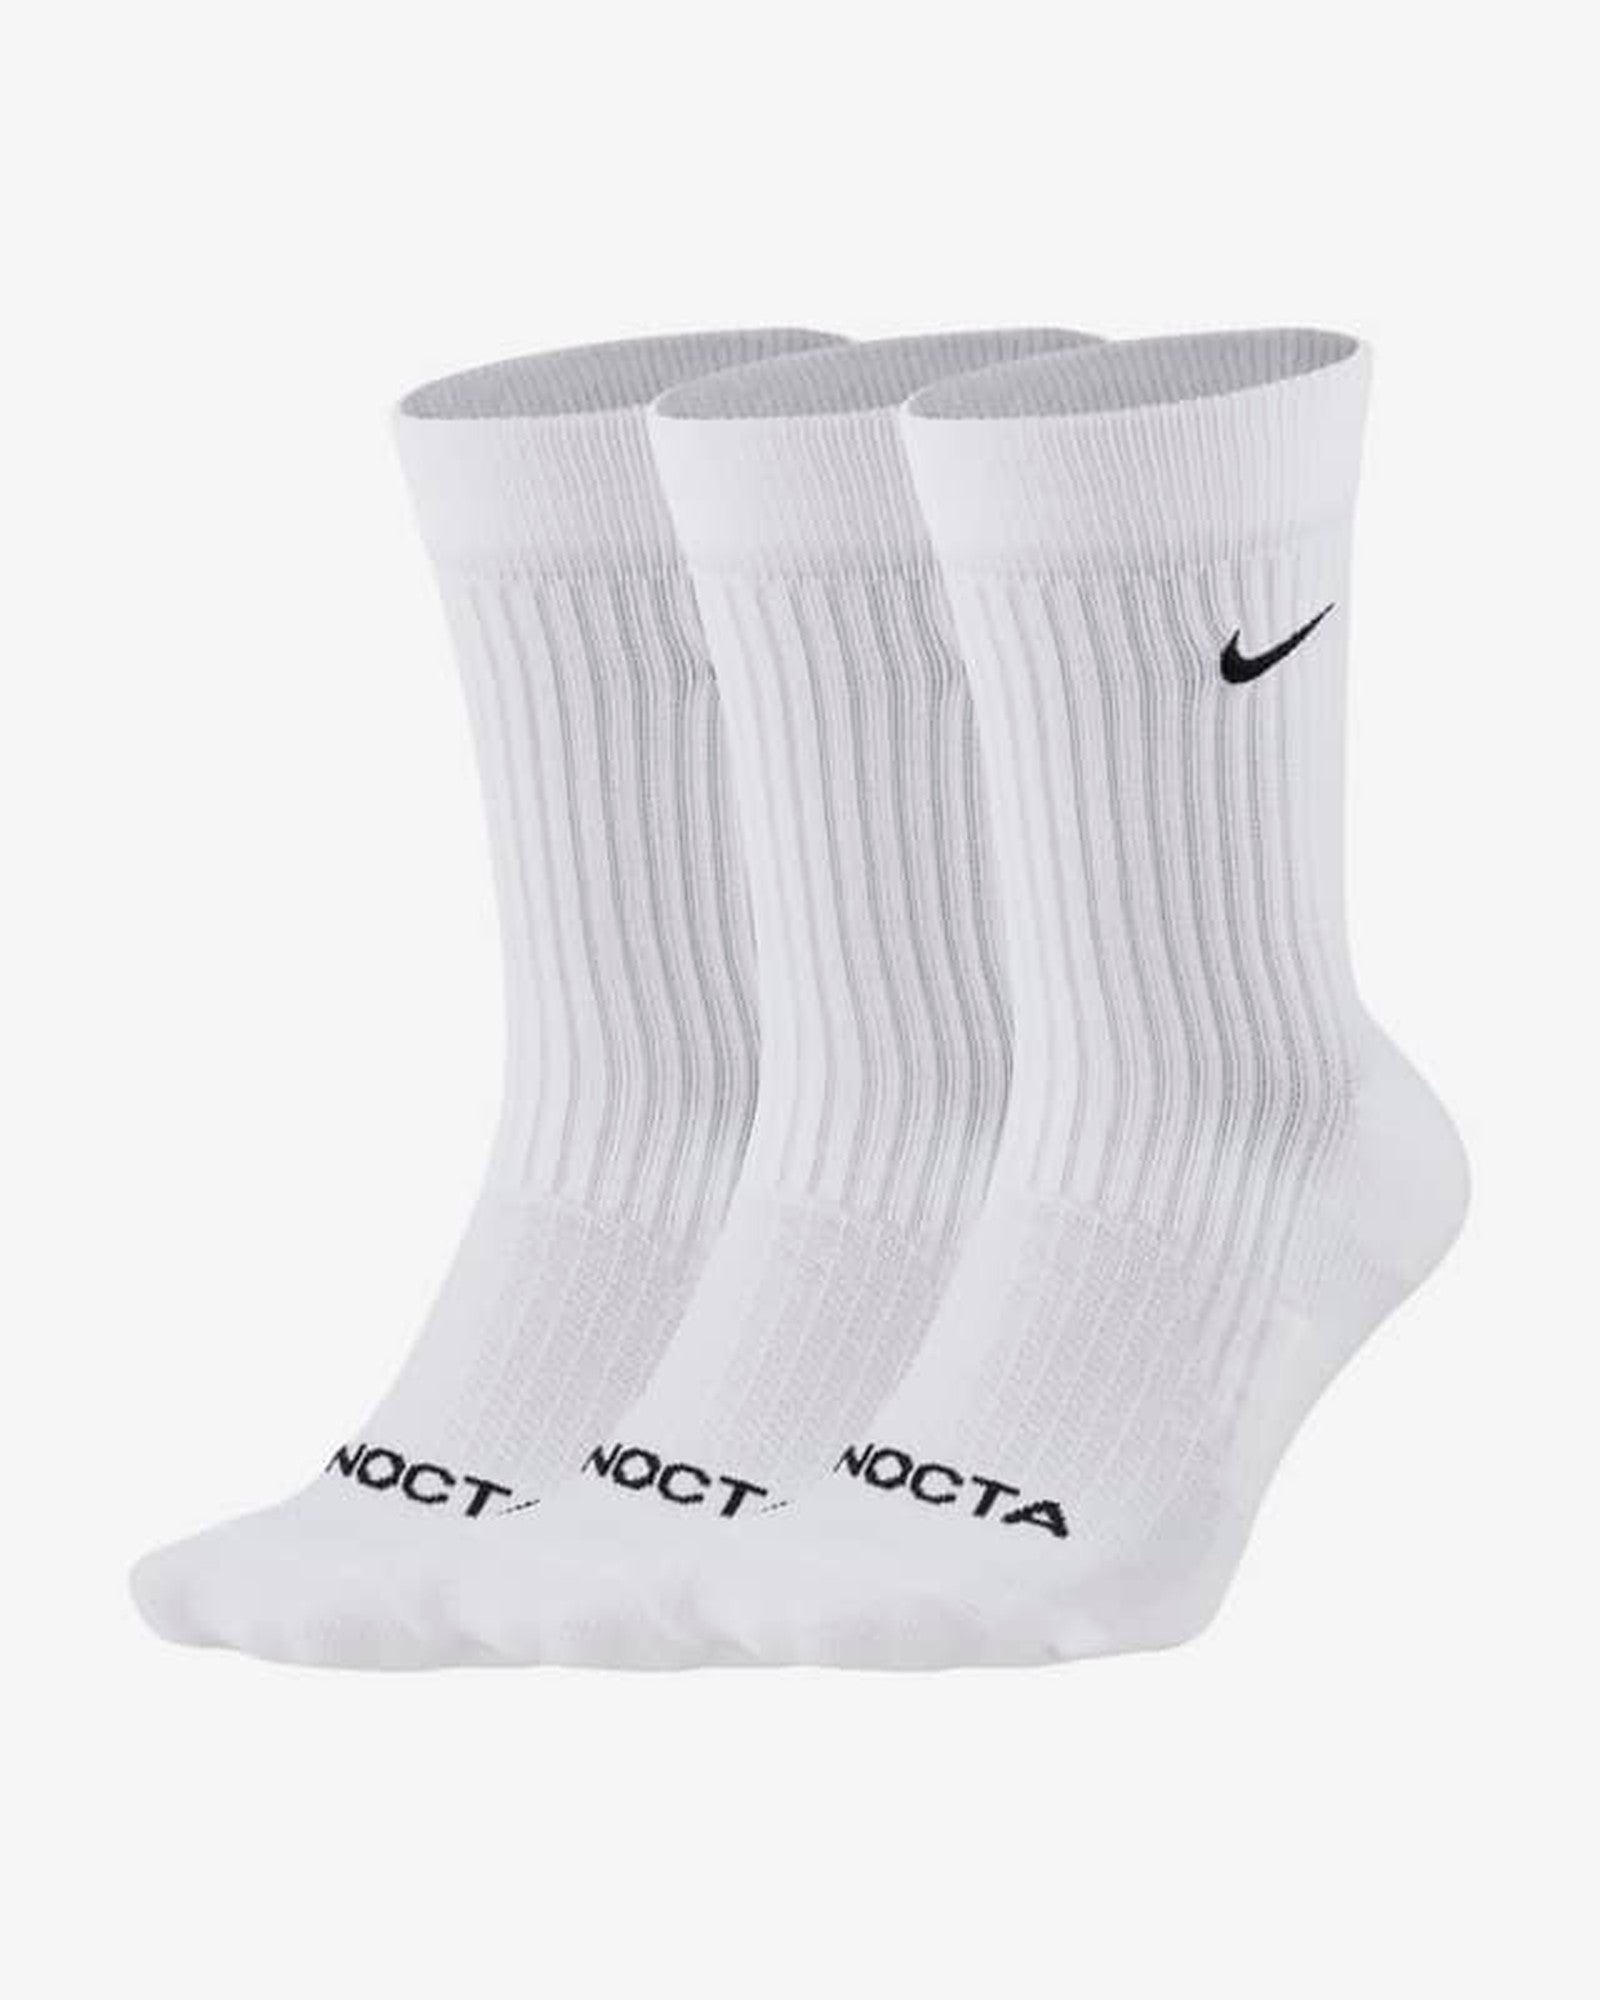 Drake x Nike "NOCTA" White Socks